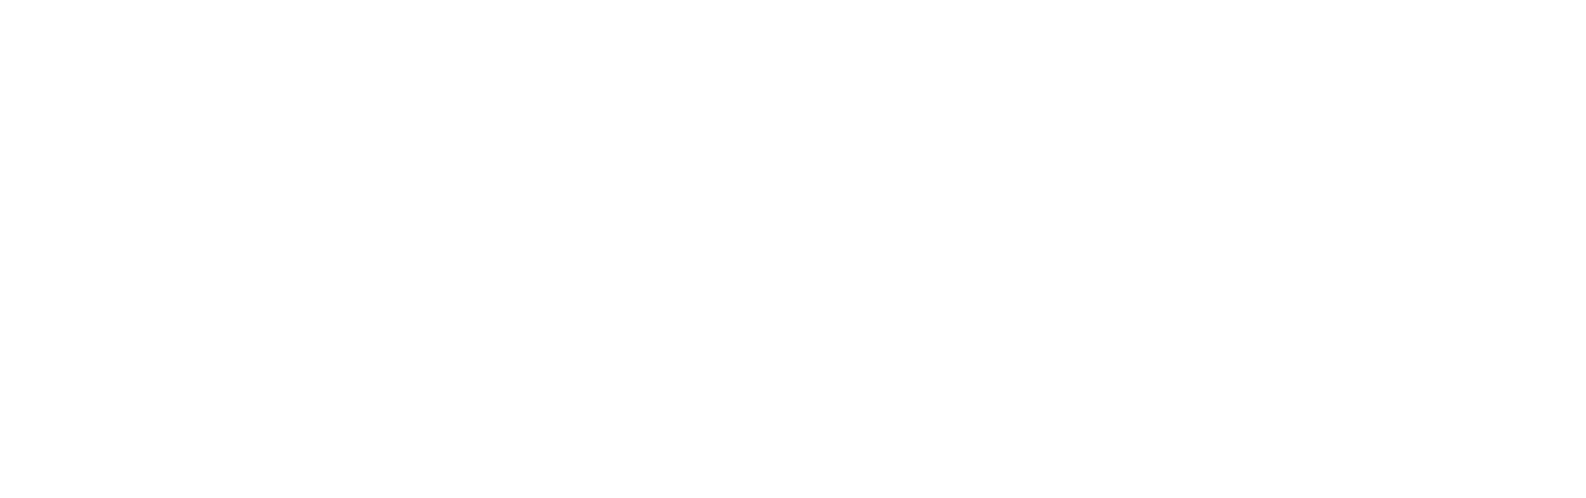 Remgro Limited Logo groß für dunkle Hintergründe (transparentes PNG)